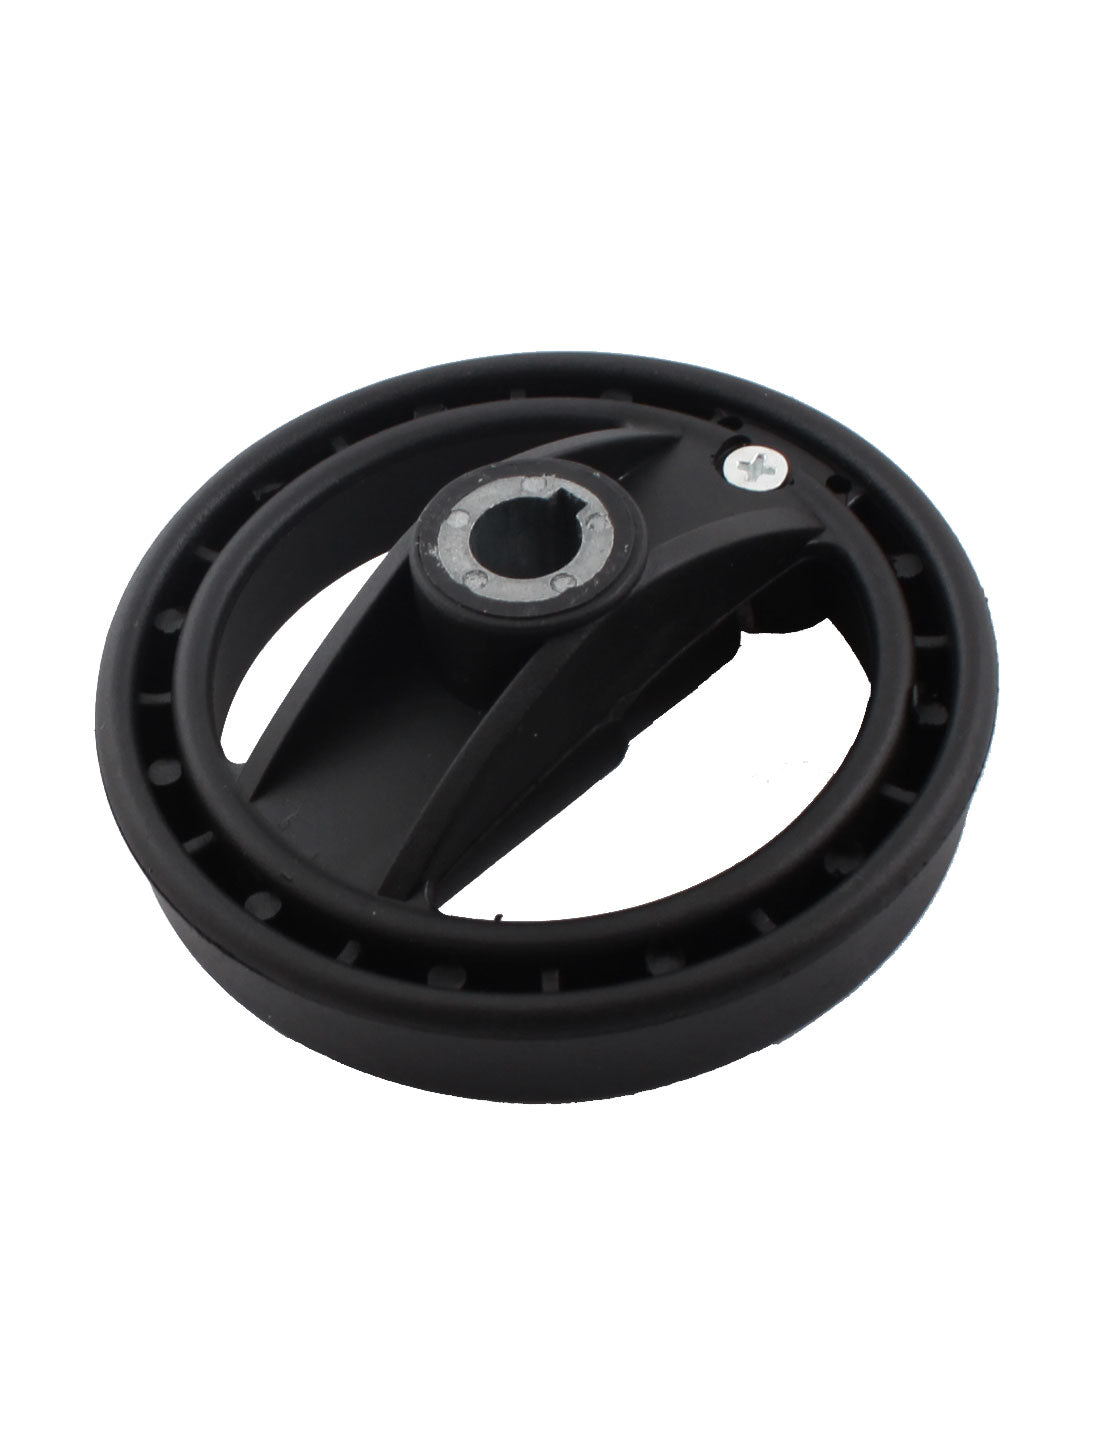 Uxcell Uxcell 12mmx100mm Black Plastic 2 Spoke Handwheel Hand Wheel w Revolving Handle for Industrial Milling Machine